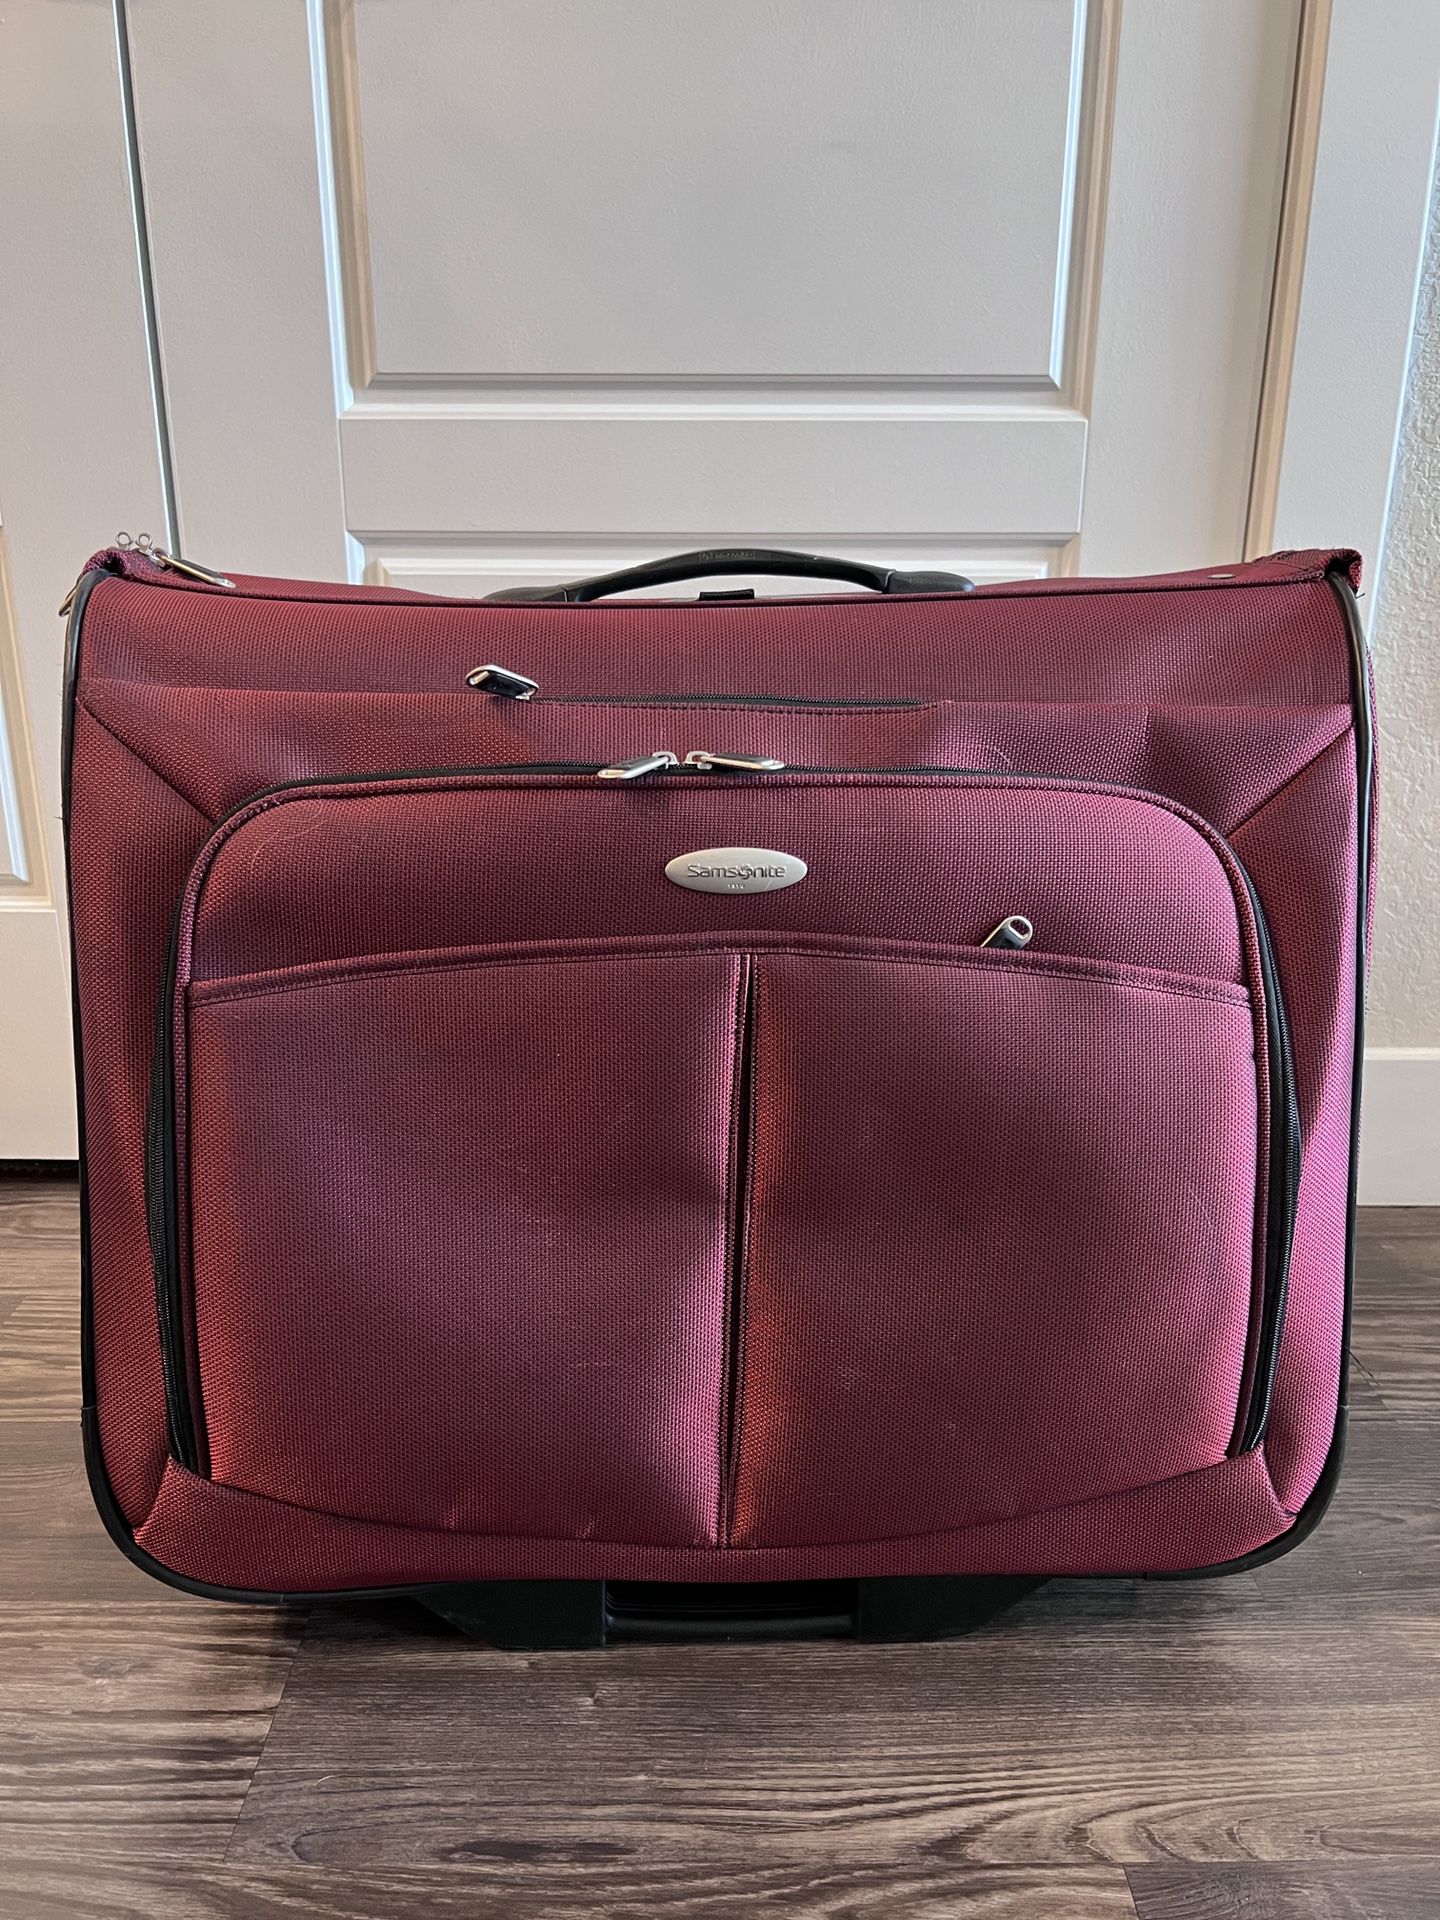 Samsonite Rolling Garment Suitcase - Wedding Or Business Suitcase